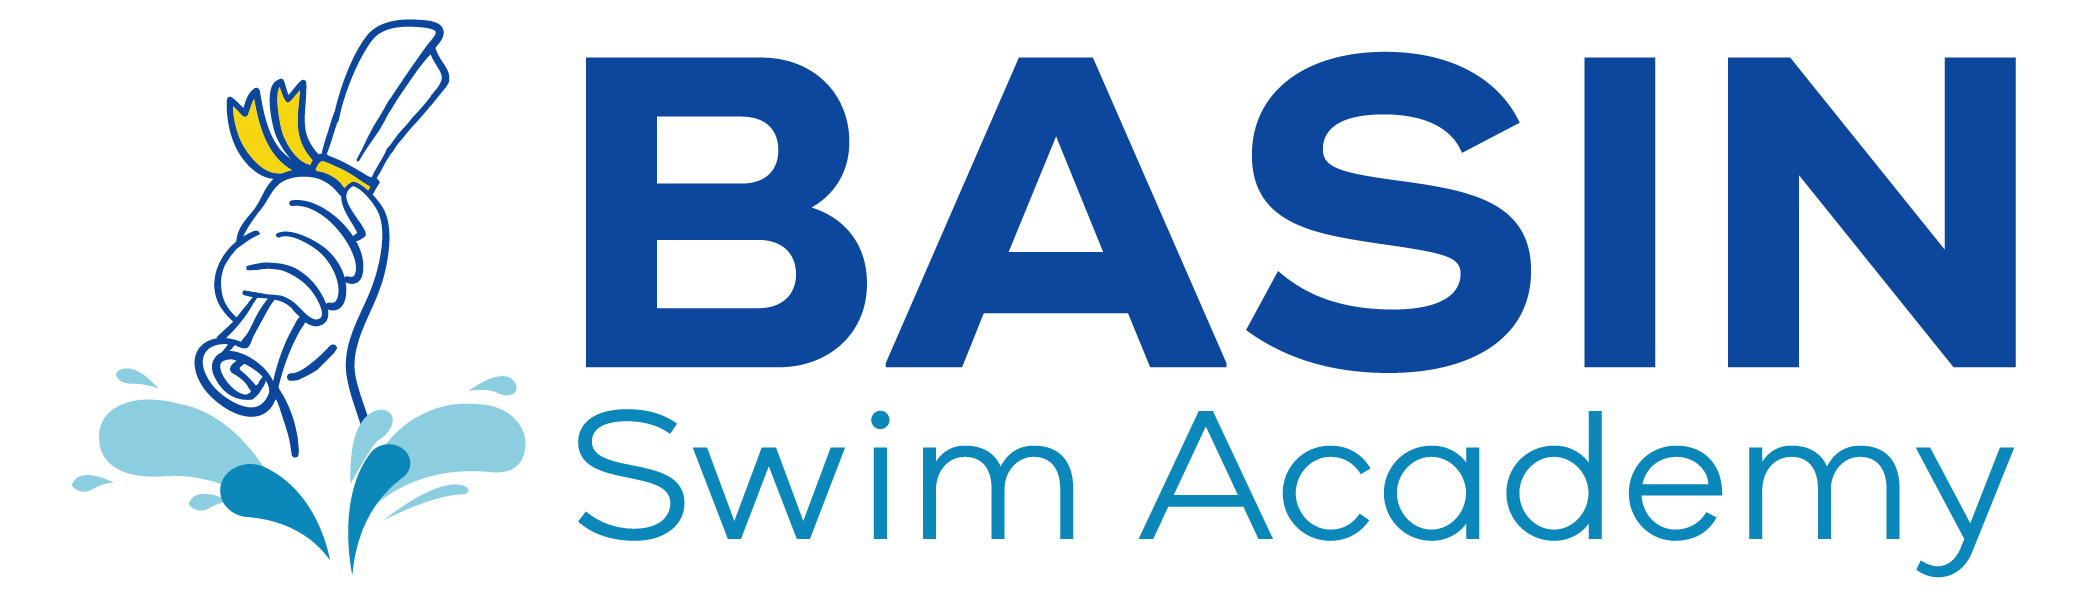 Basin Swim Academy